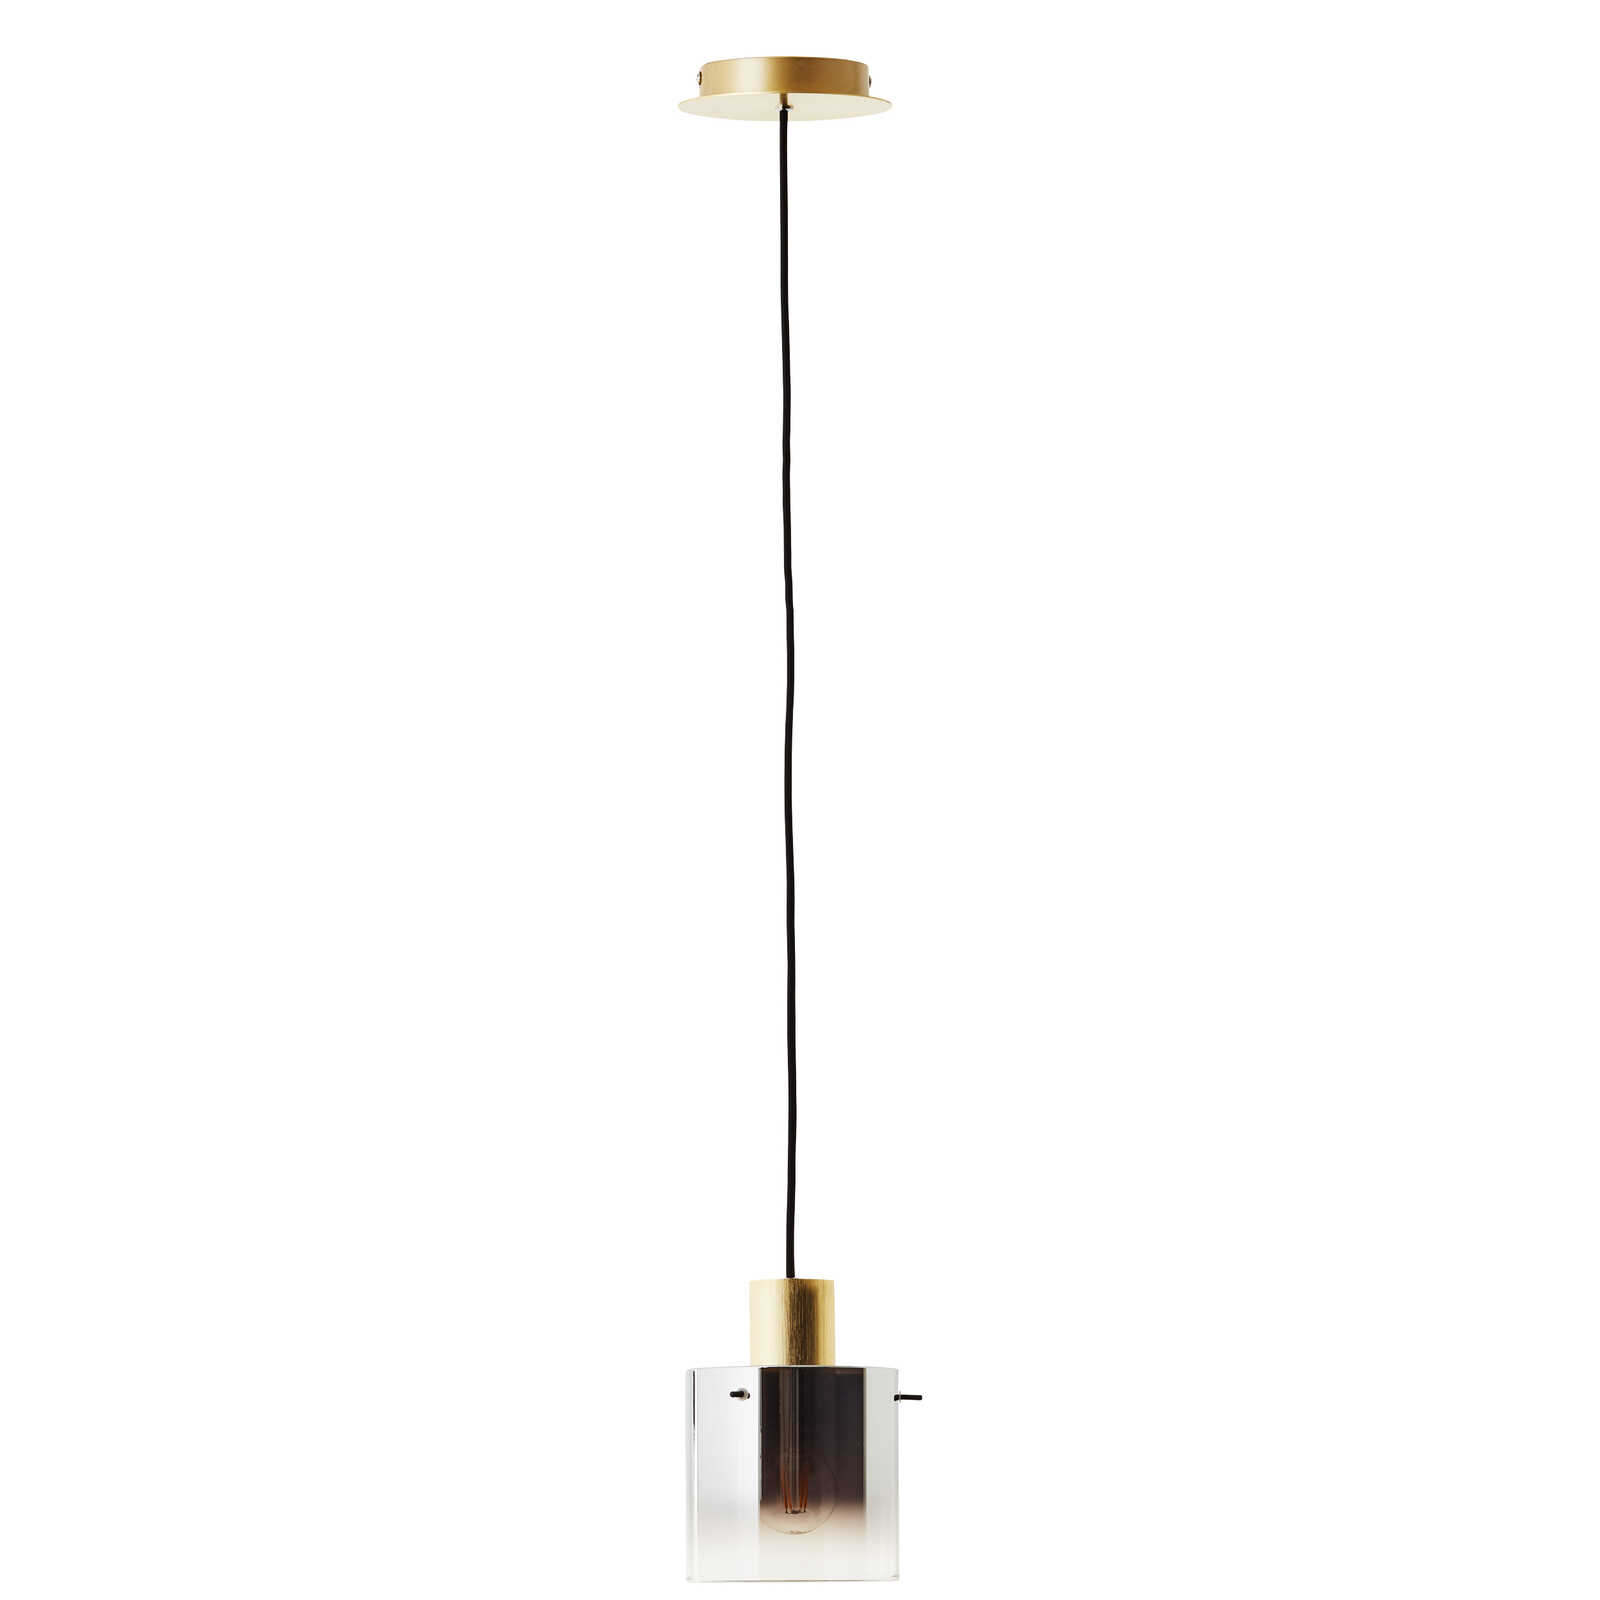             Lámpara colgante de cristal - Maja 2 - Oro
        